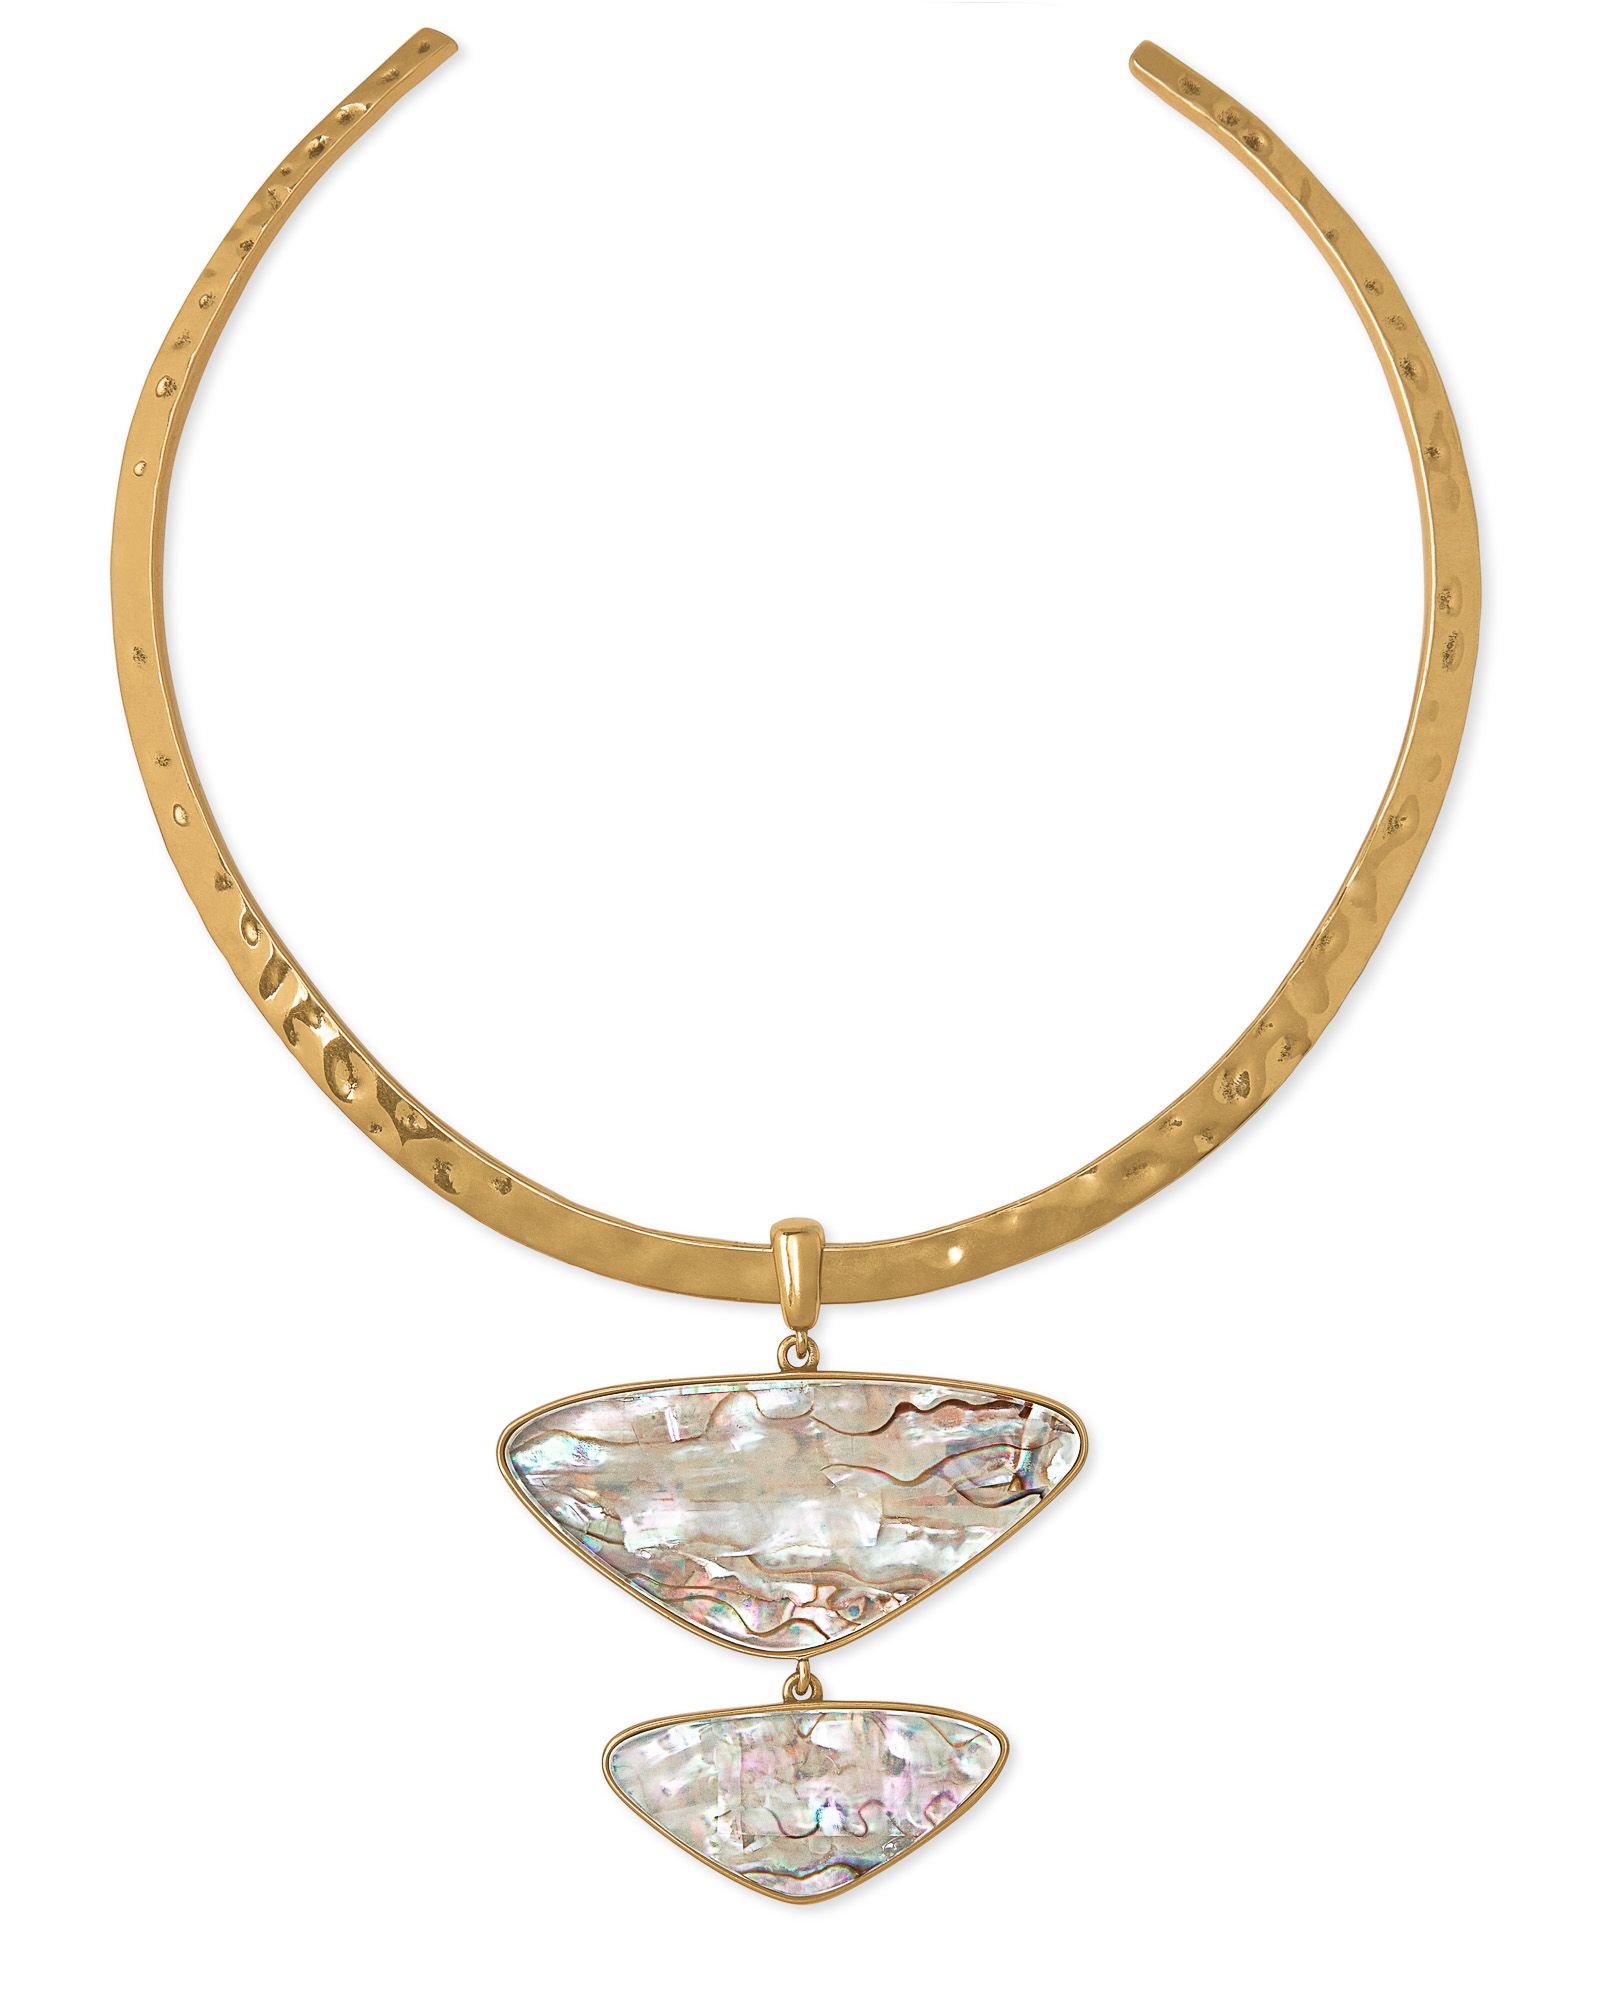 Margot Vintage Gold Statement Necklace in White Abalone | Kendra Scott